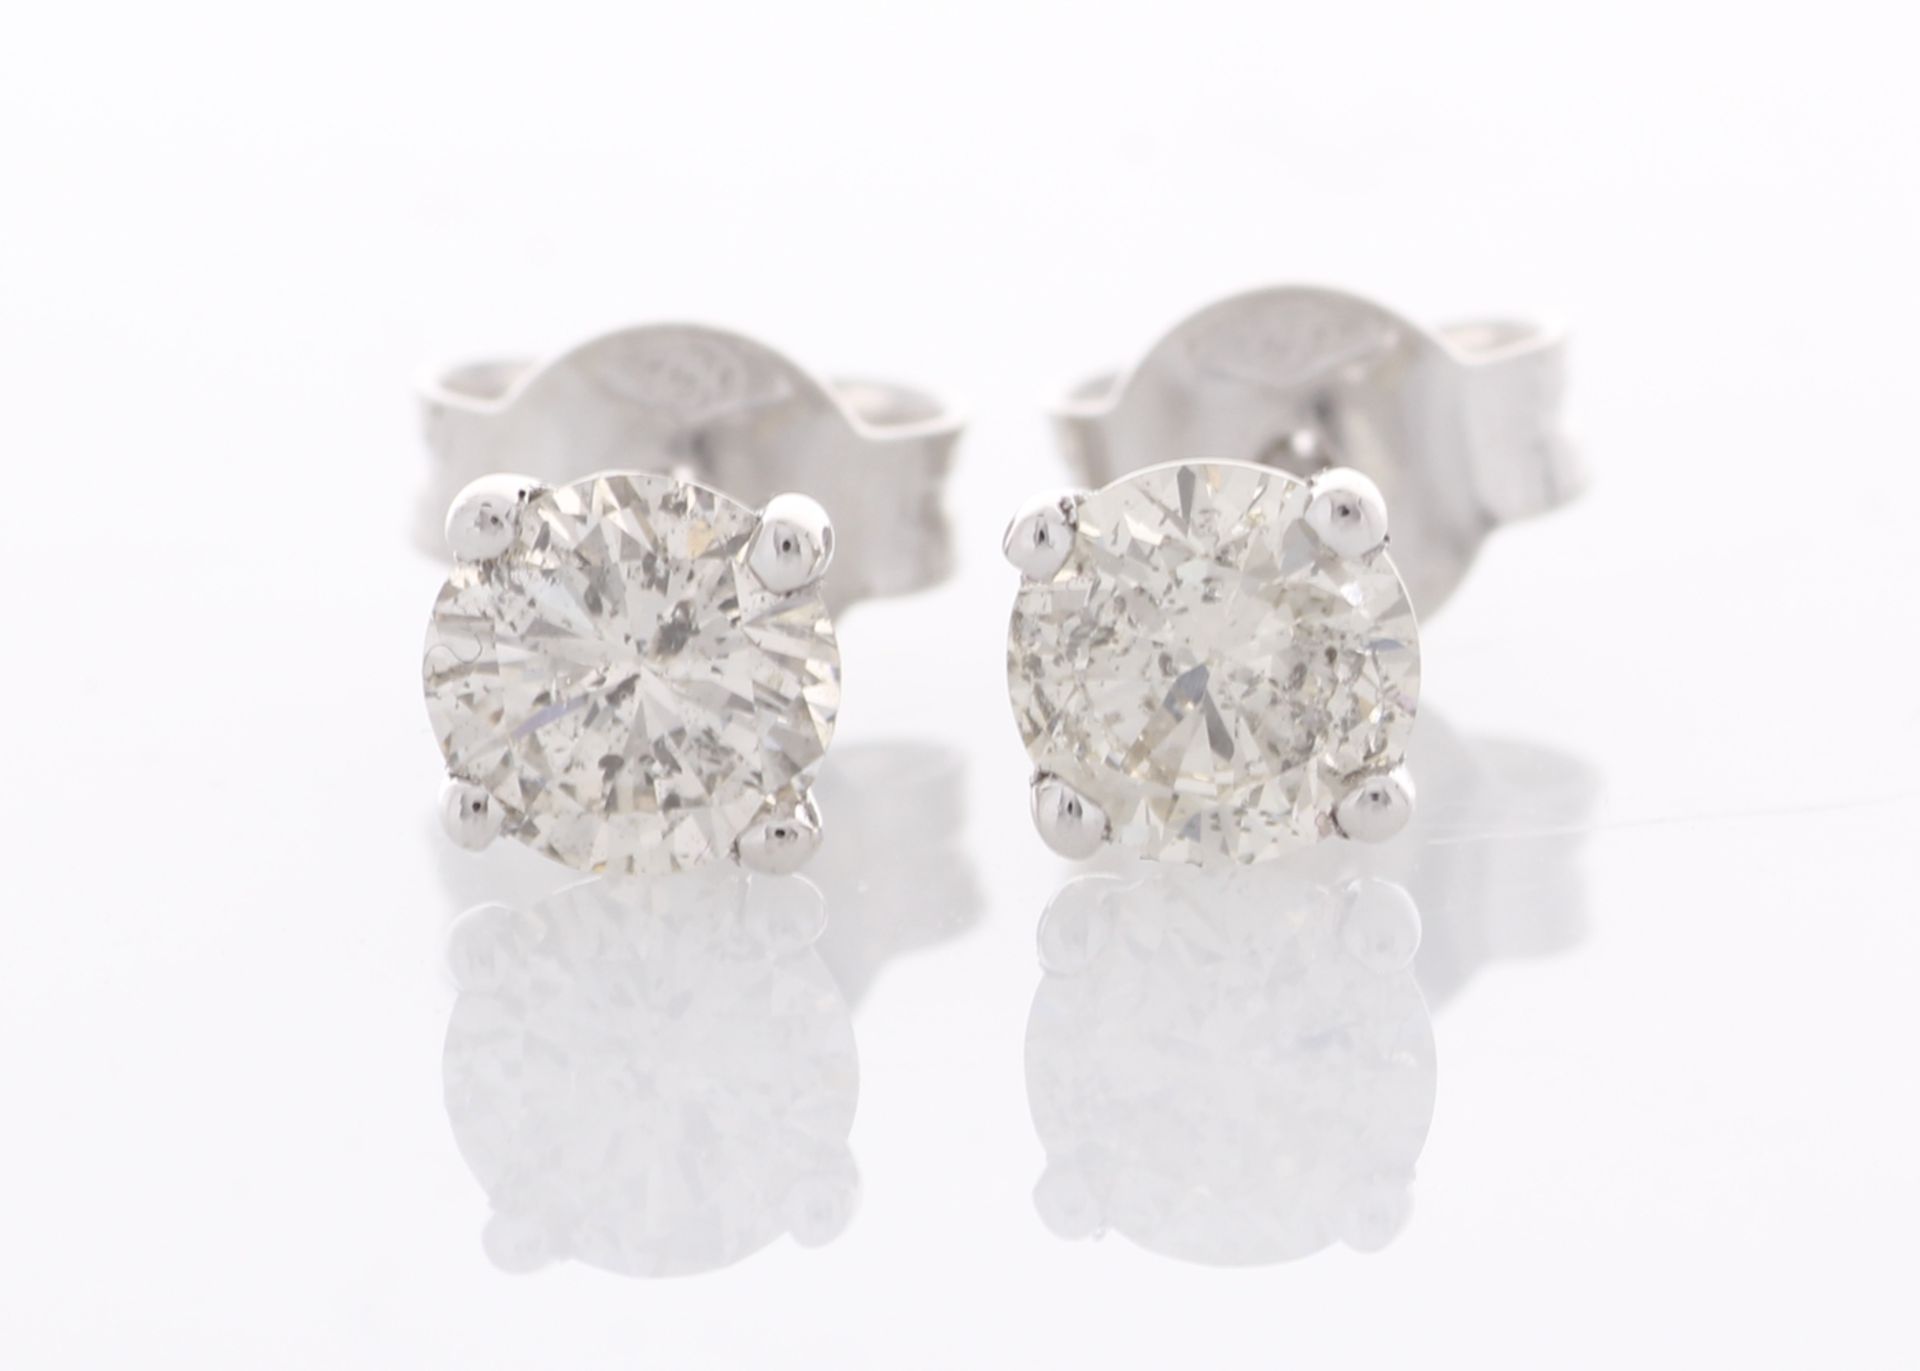 18ct White Gold Single Stone Prong Set Diamond Earring 0.99 Carats - Image 2 of 4